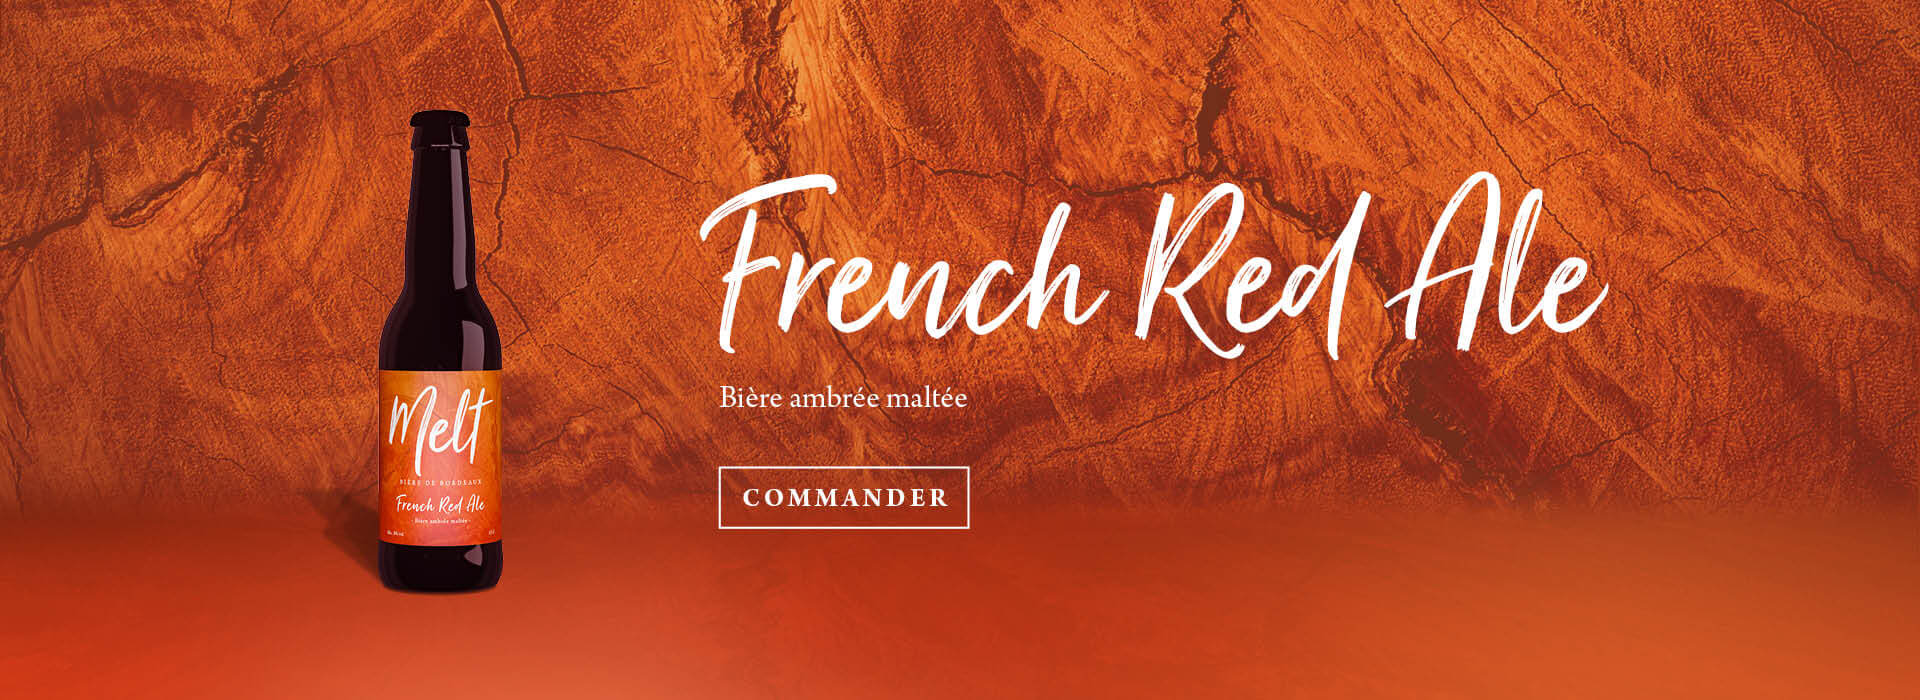 Commander la French Red Ale de la Brasserie Melt